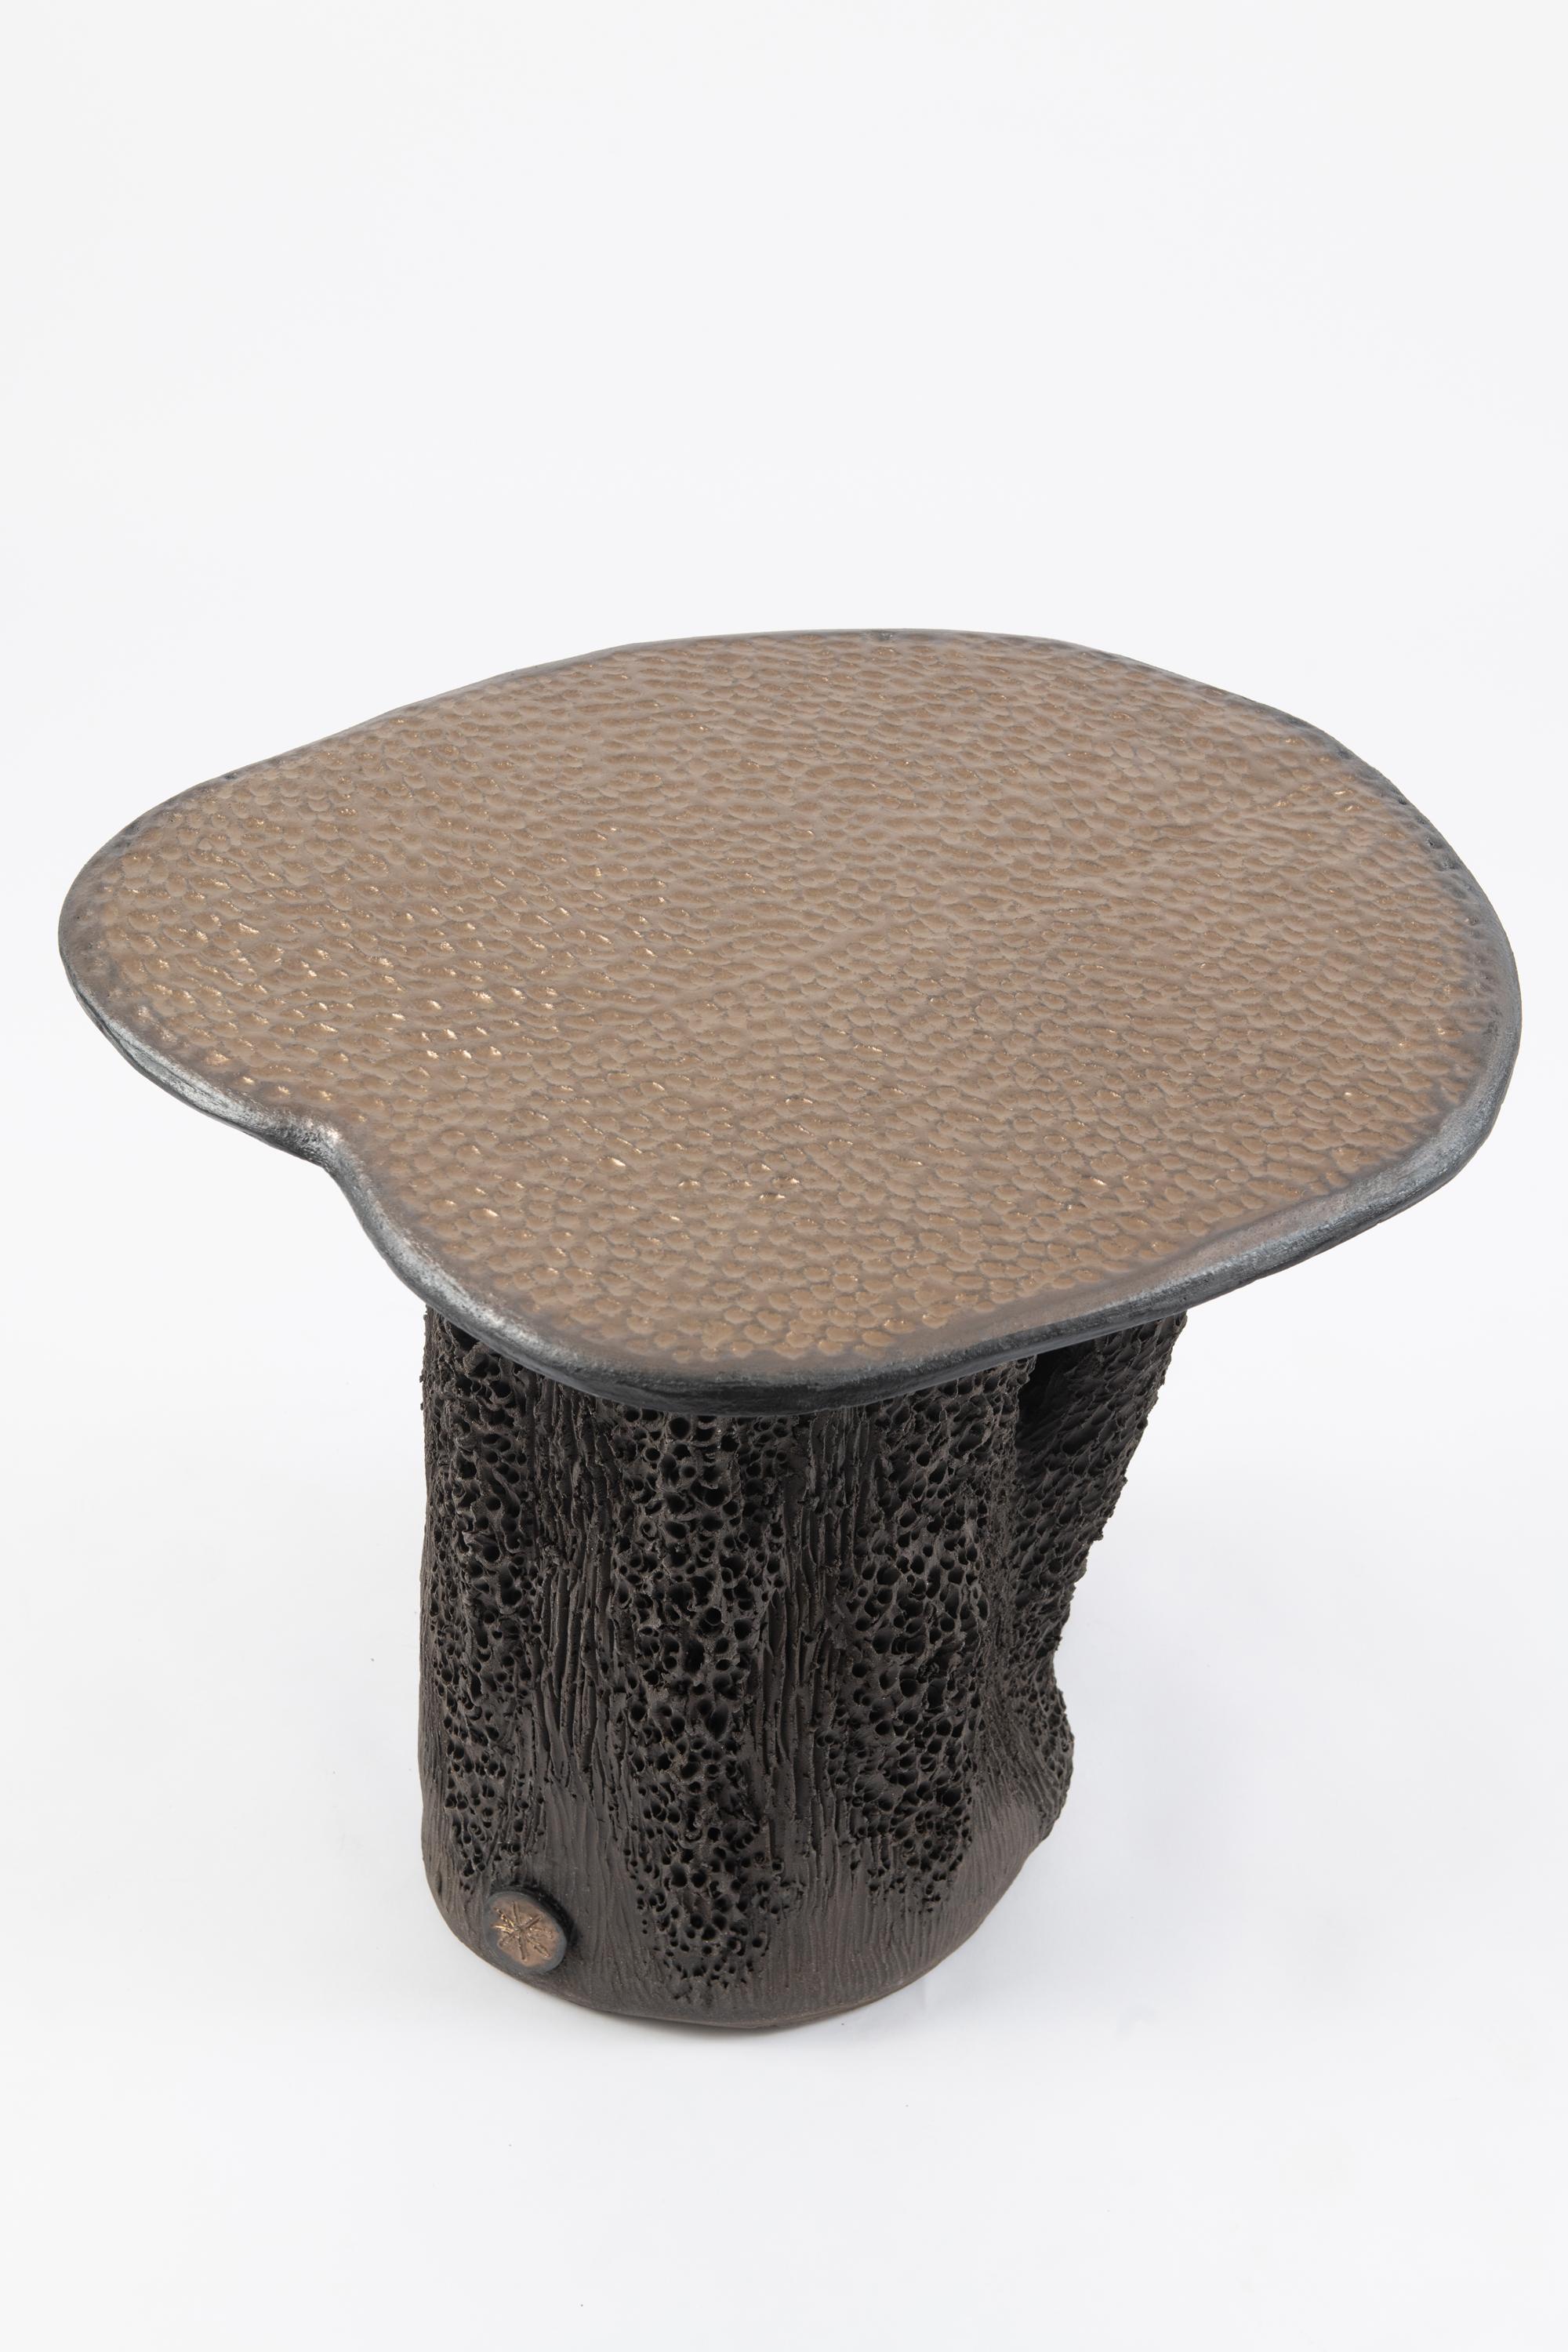 Trish DeMasi
Lotus table, 2022
Glazed and raw stoneware
Measures: 23 x 20 x 20 in.
  